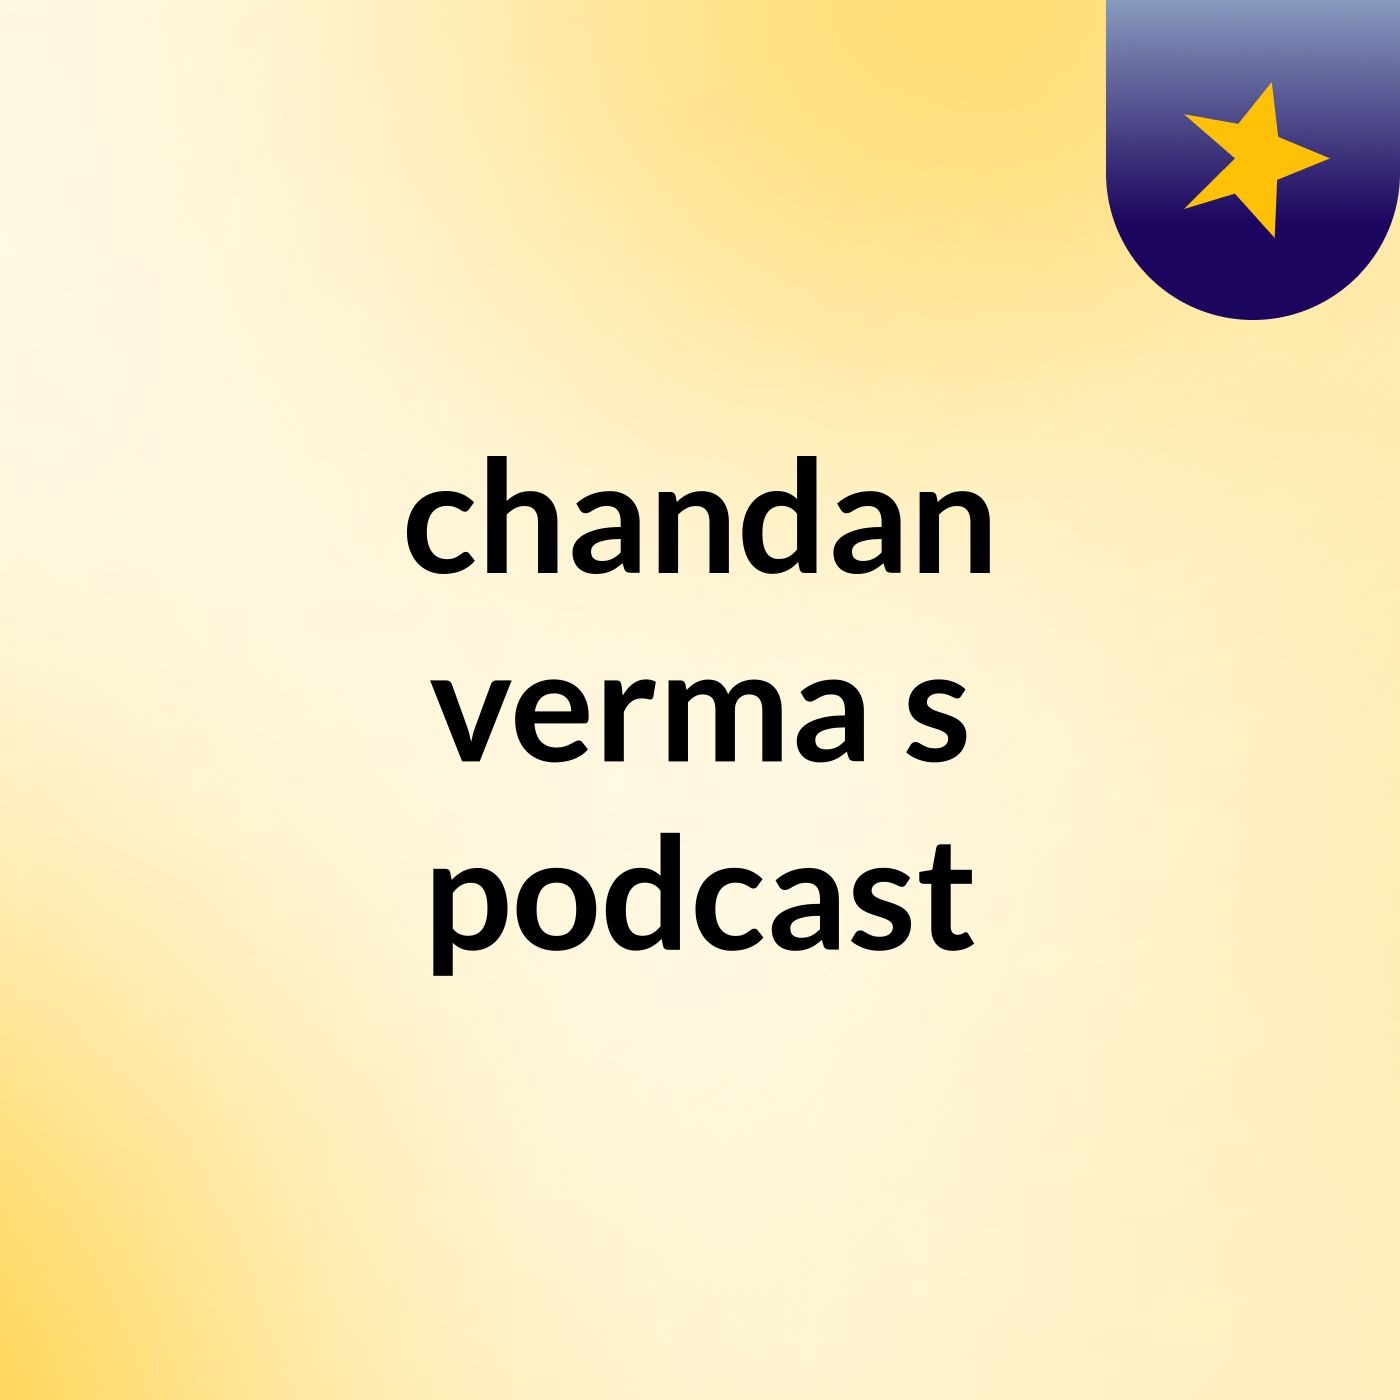 chandan verma's podcast